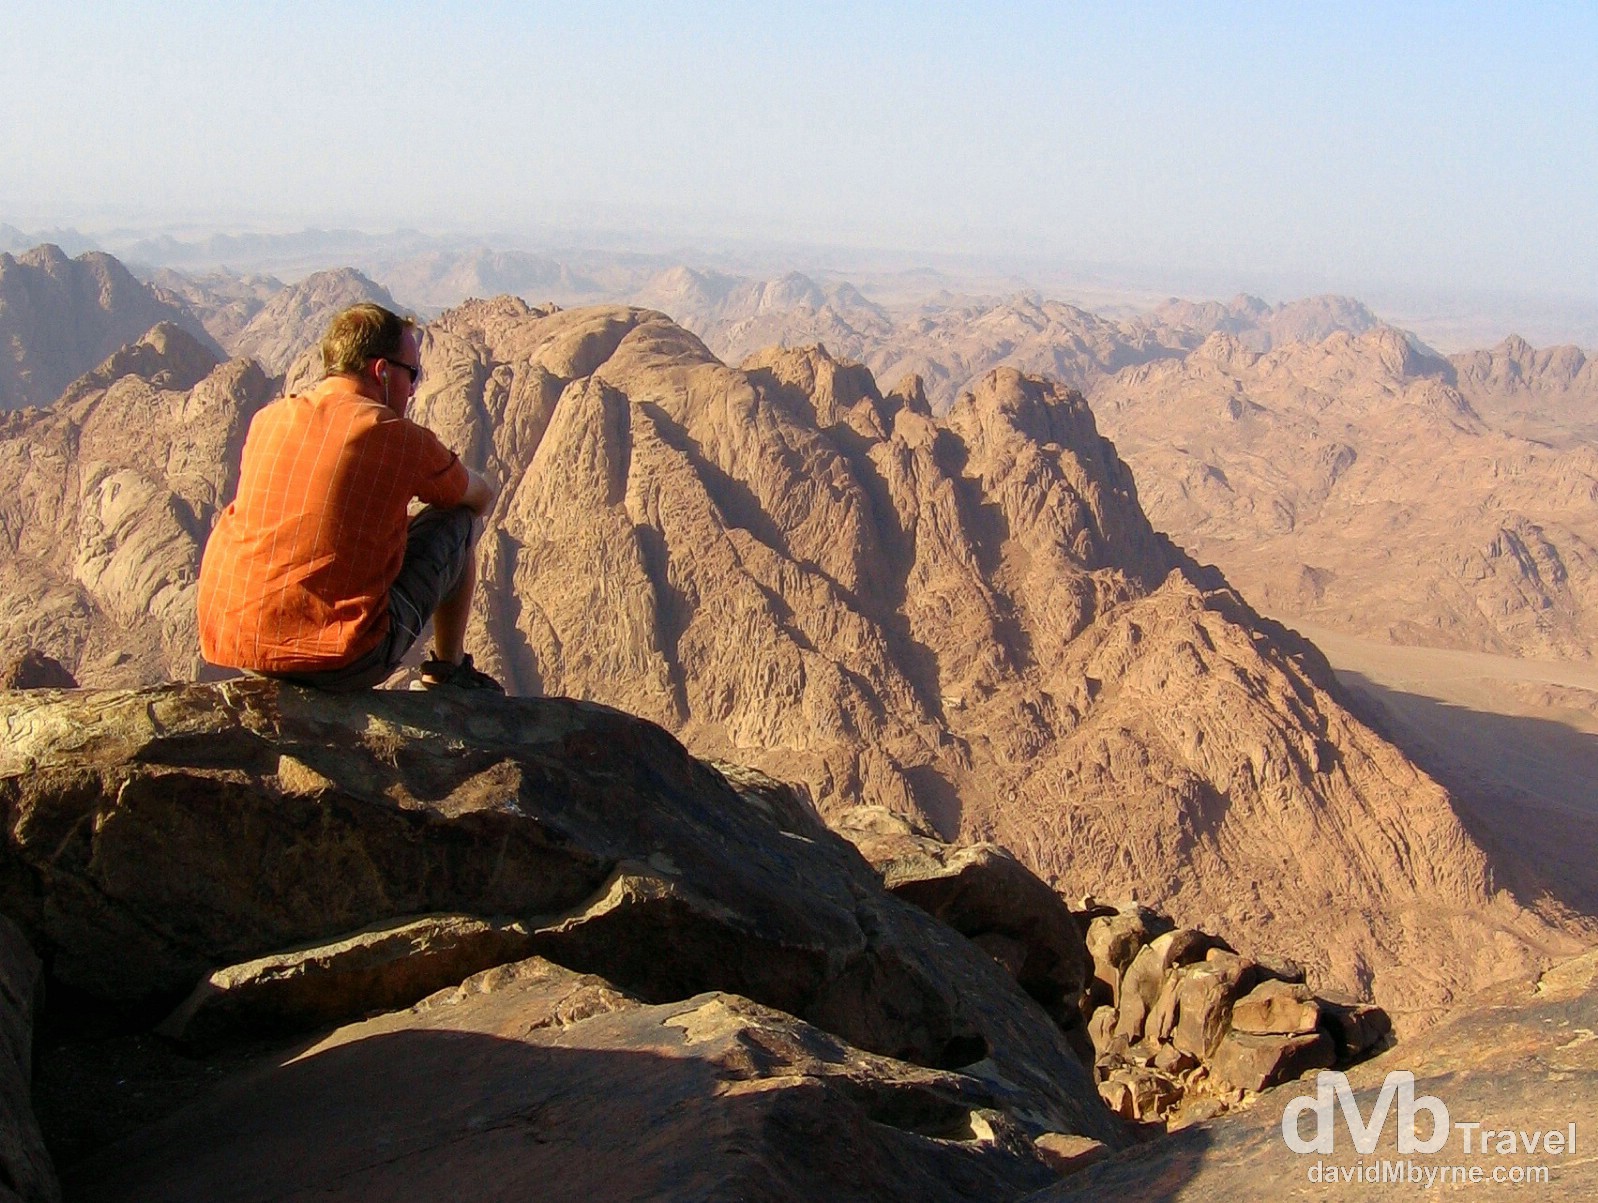 Waiting for sunset atop Mt. Sinai, Sinai Peninsula, Egypt. April 22, 2008.